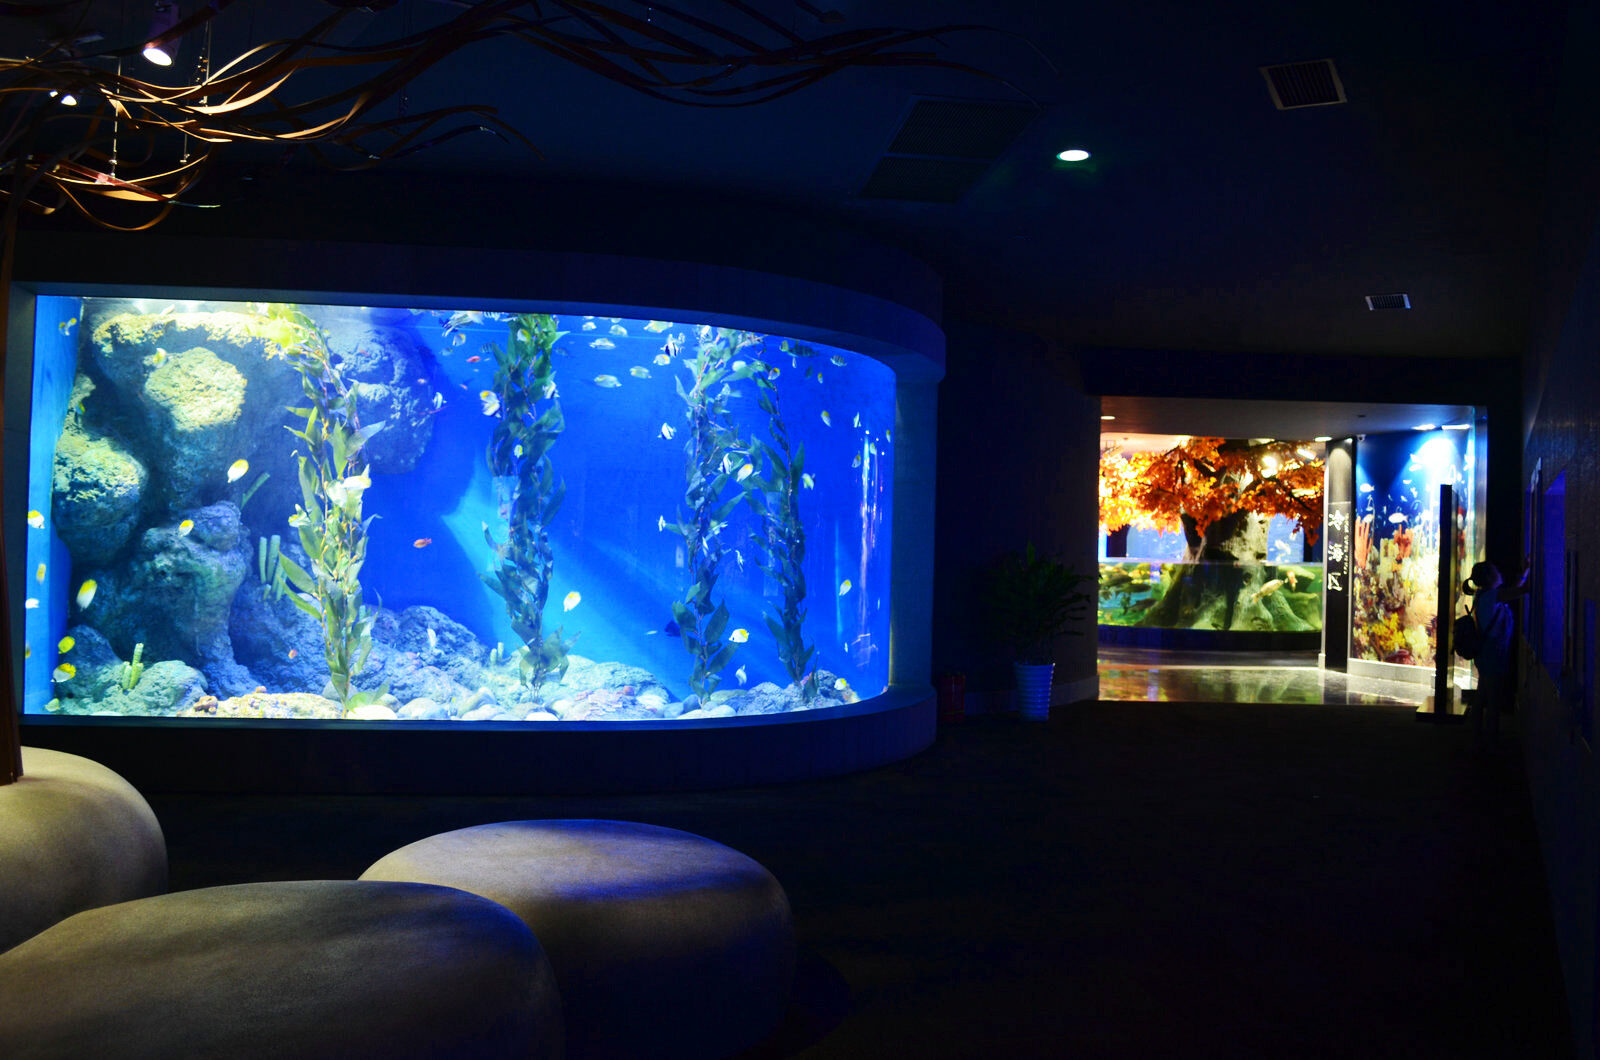 sea grass kelp led light aquarium